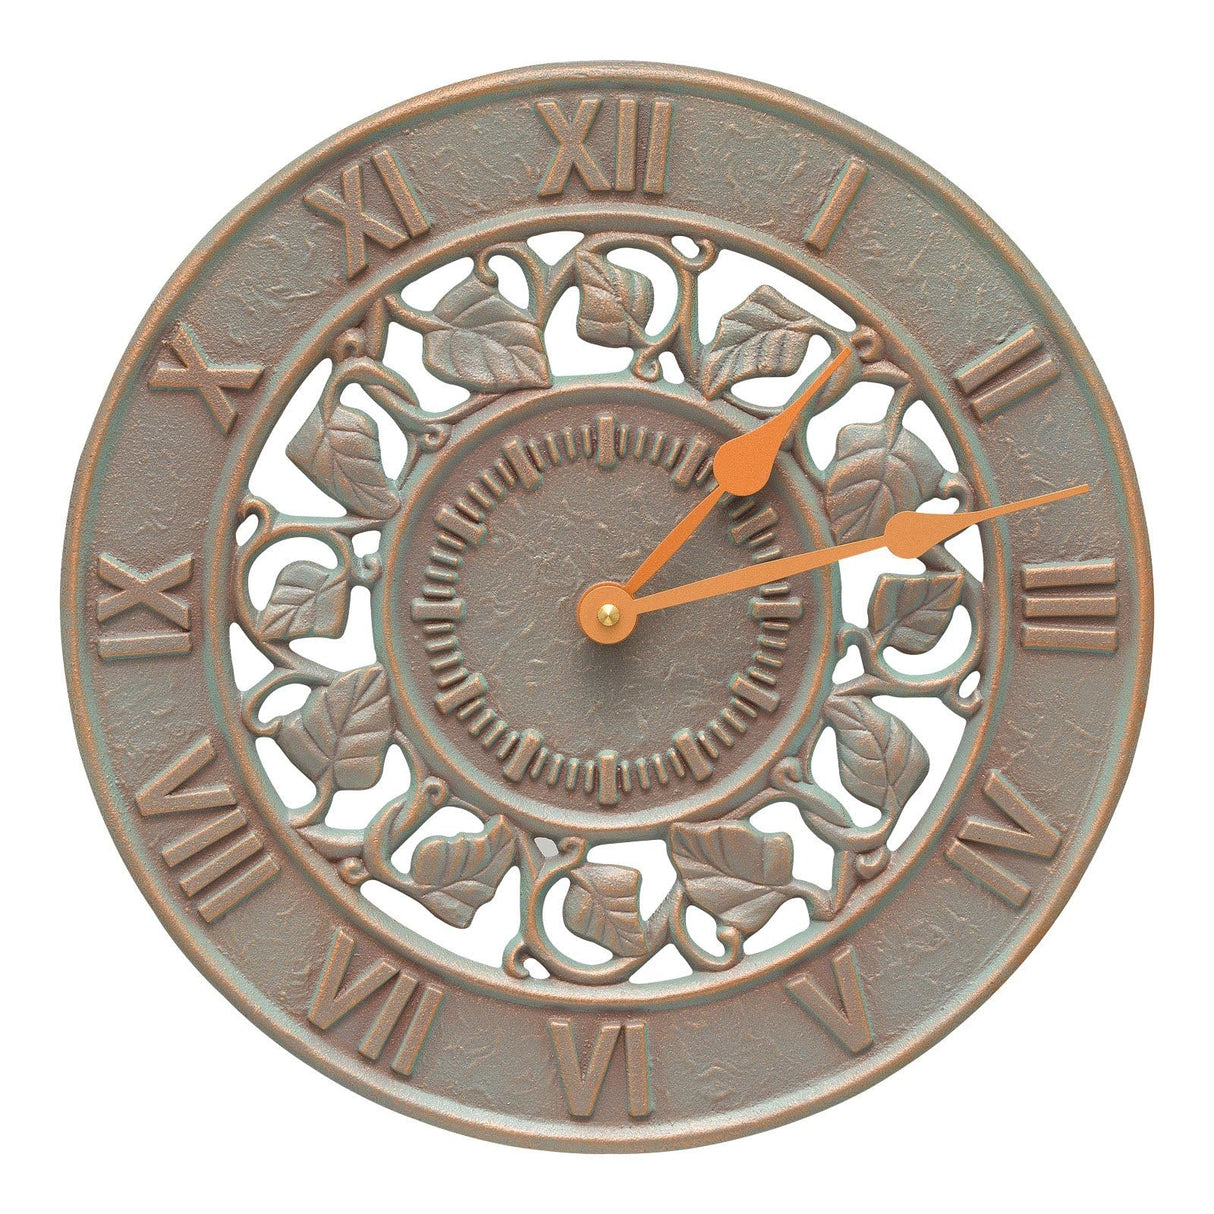 Whitehall 1281 - Ivy Silhouette 12" Indoor Outdoor Wall Clock - Copper Verdigris